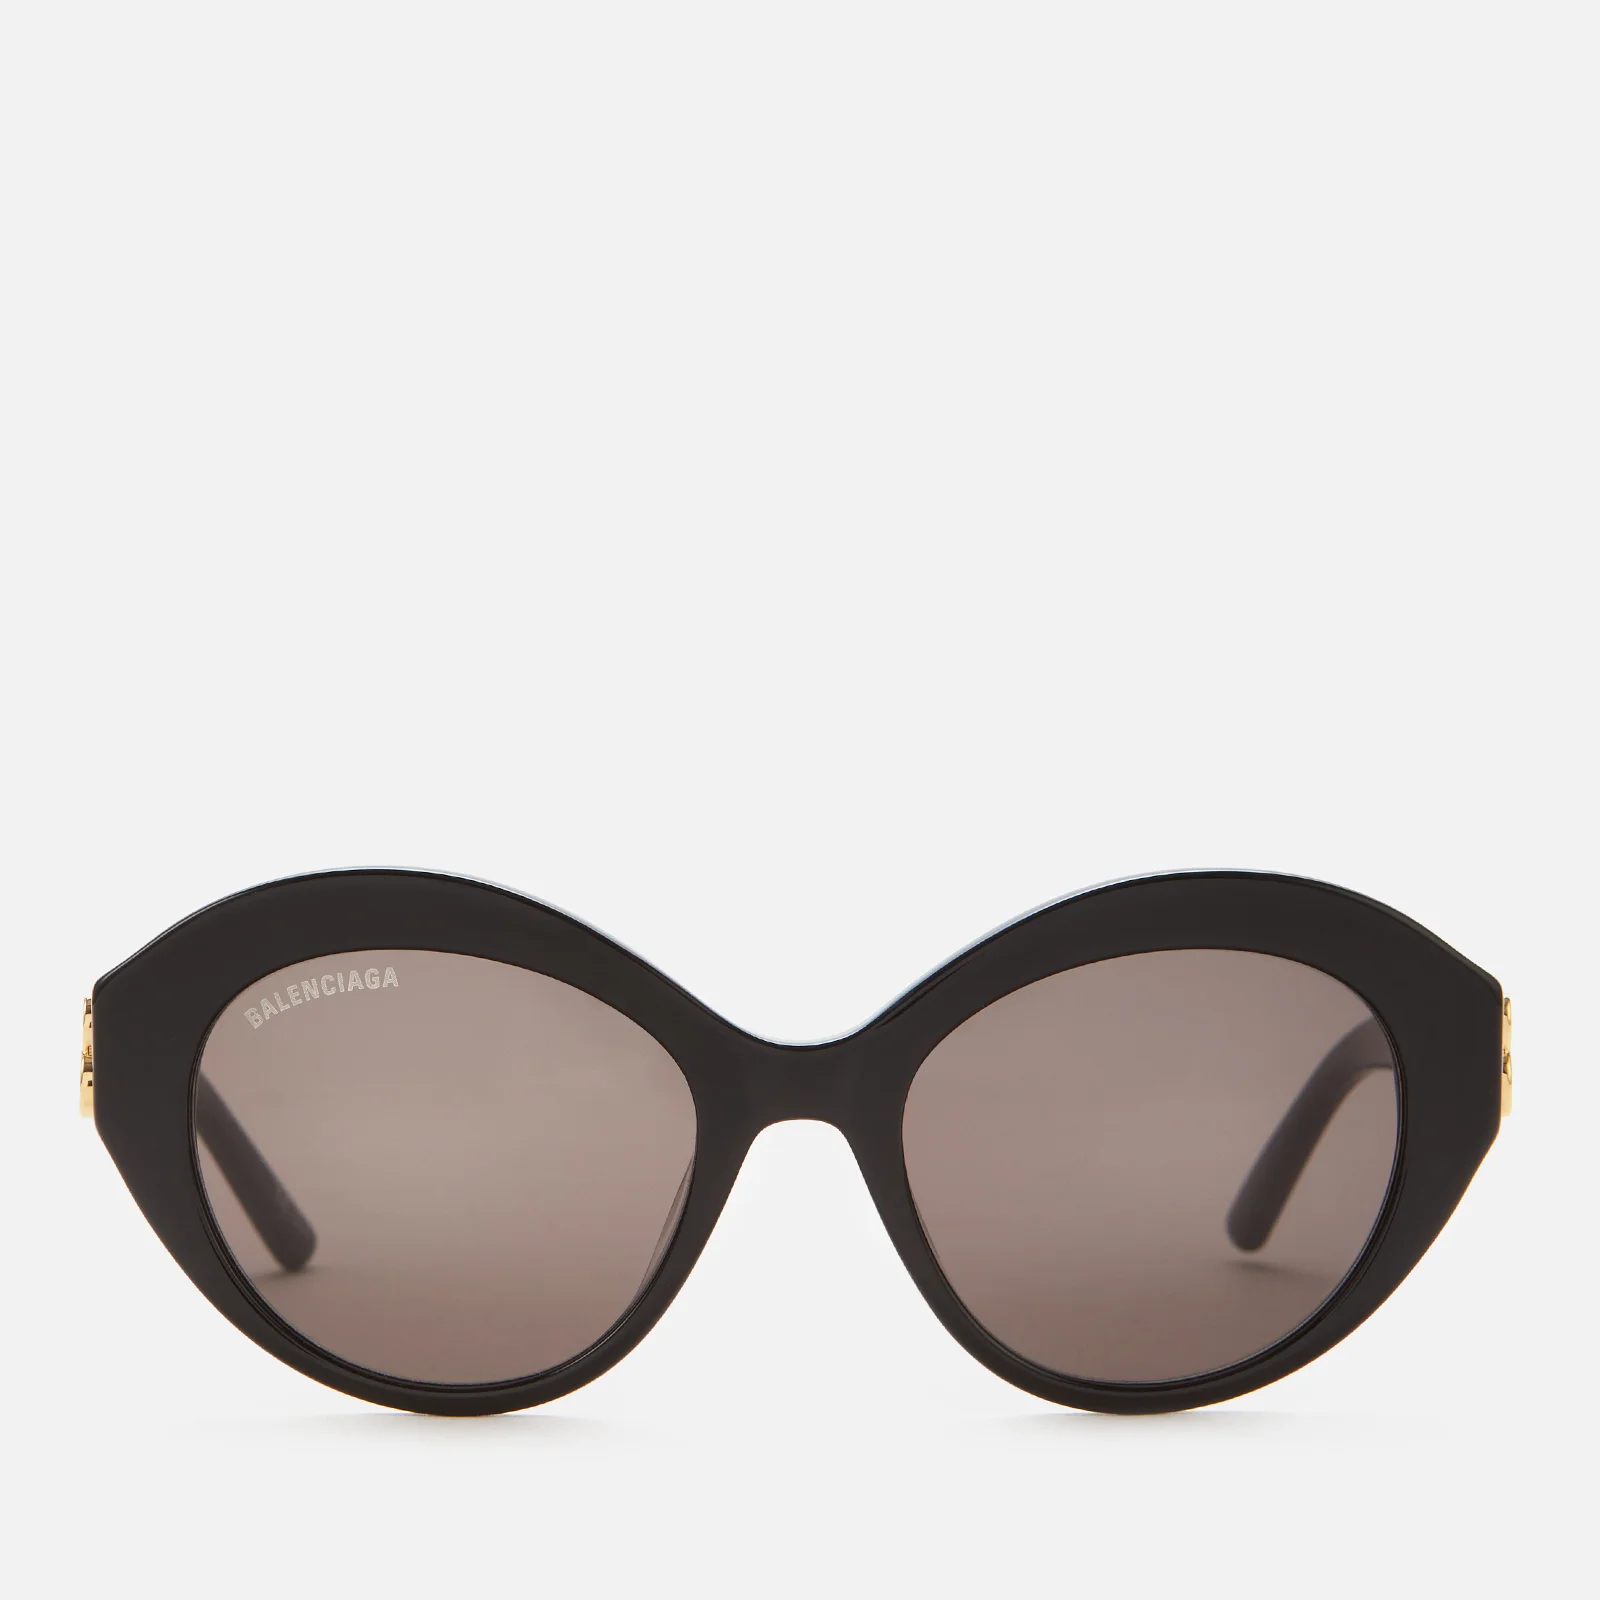 Balenciaga Women's BB Oversized Round Acetate Sunglasses - Black/Gold Image 1